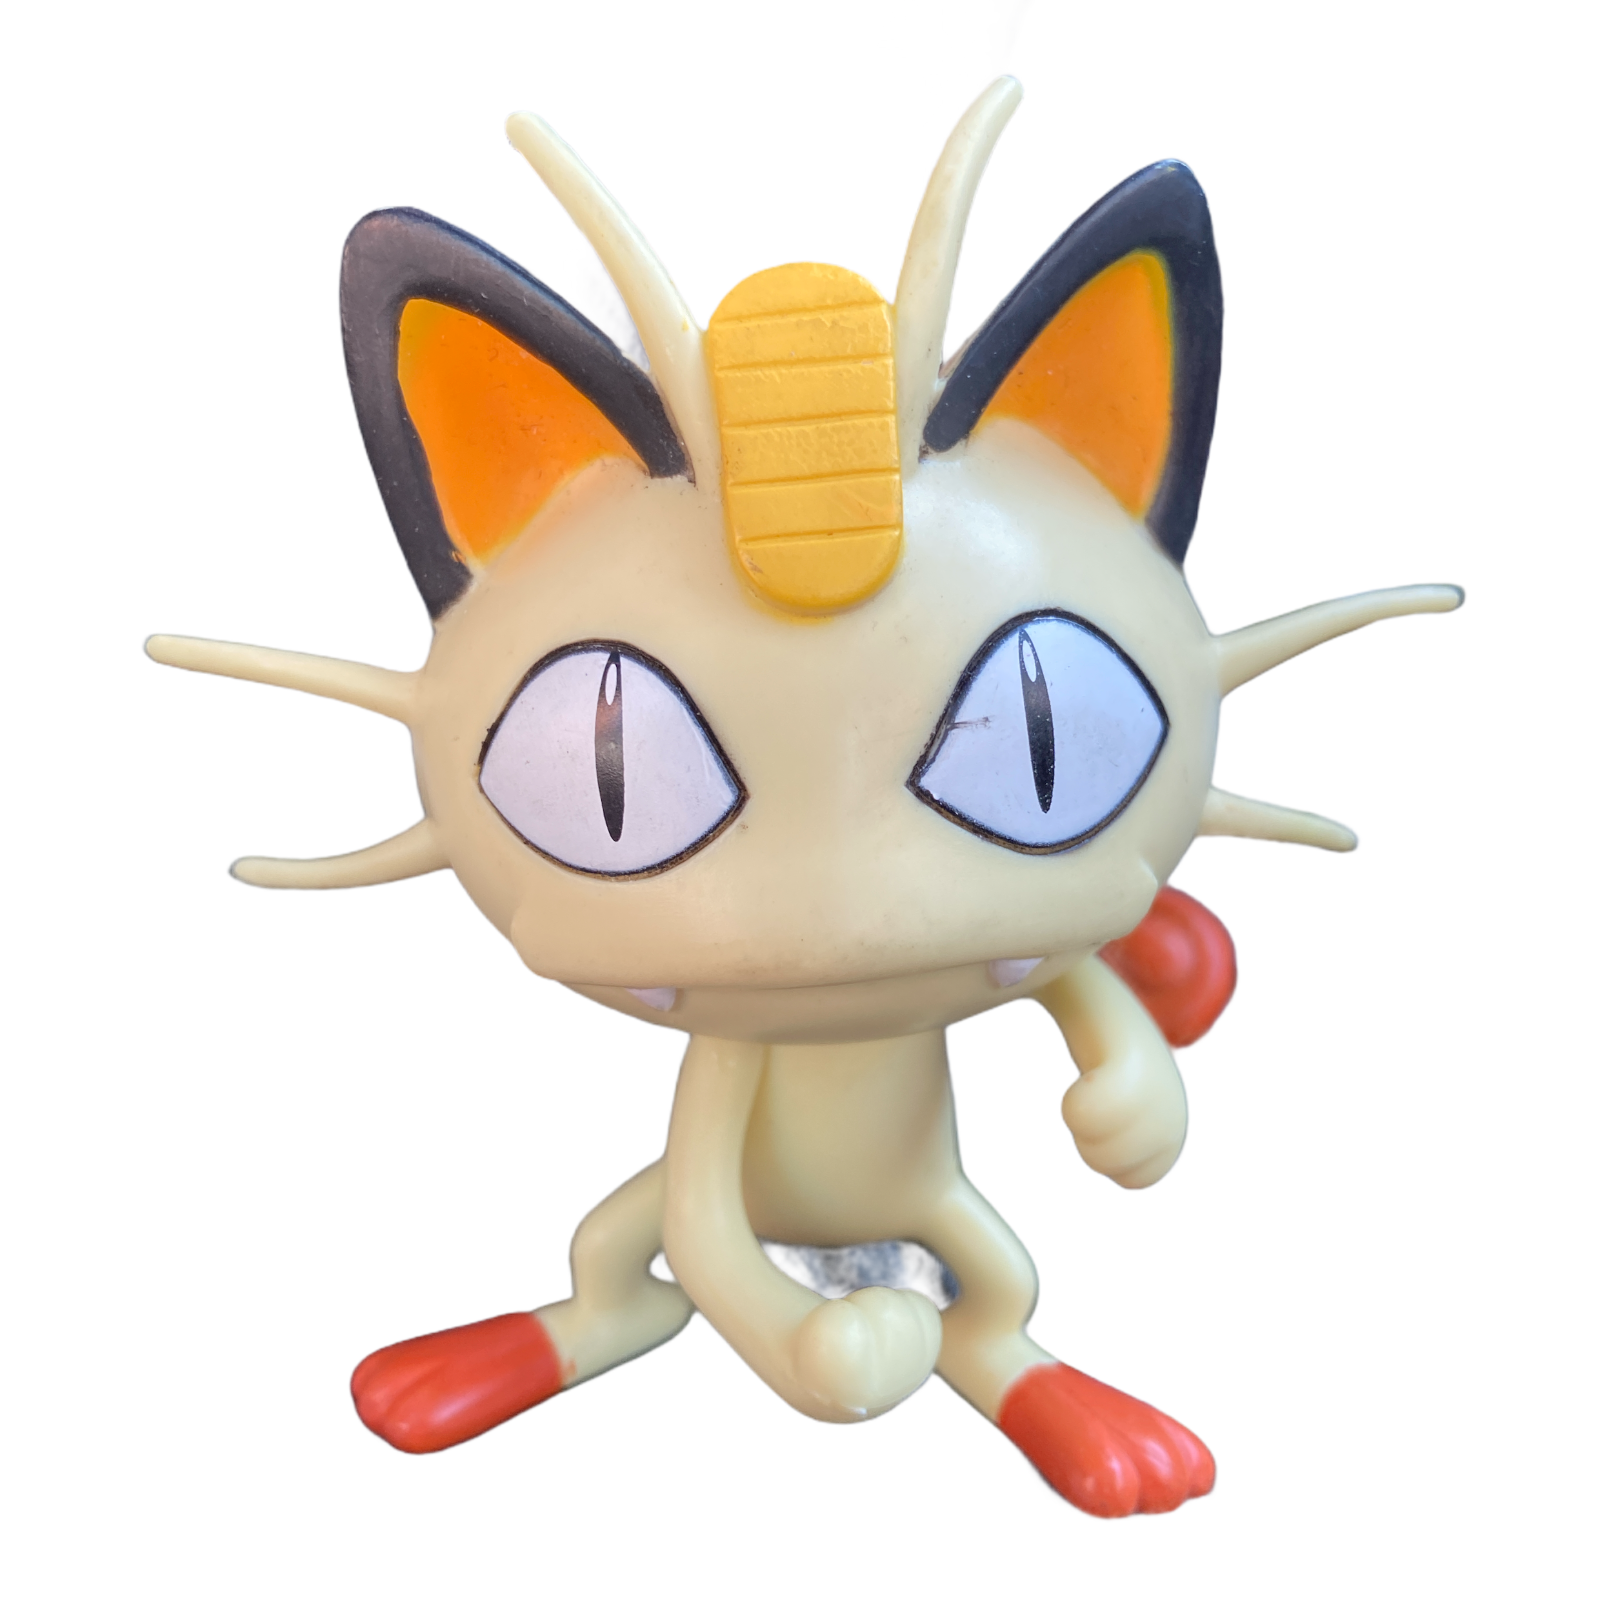 3” Meowth 2007 Pokémon PVC Figure (Loose)